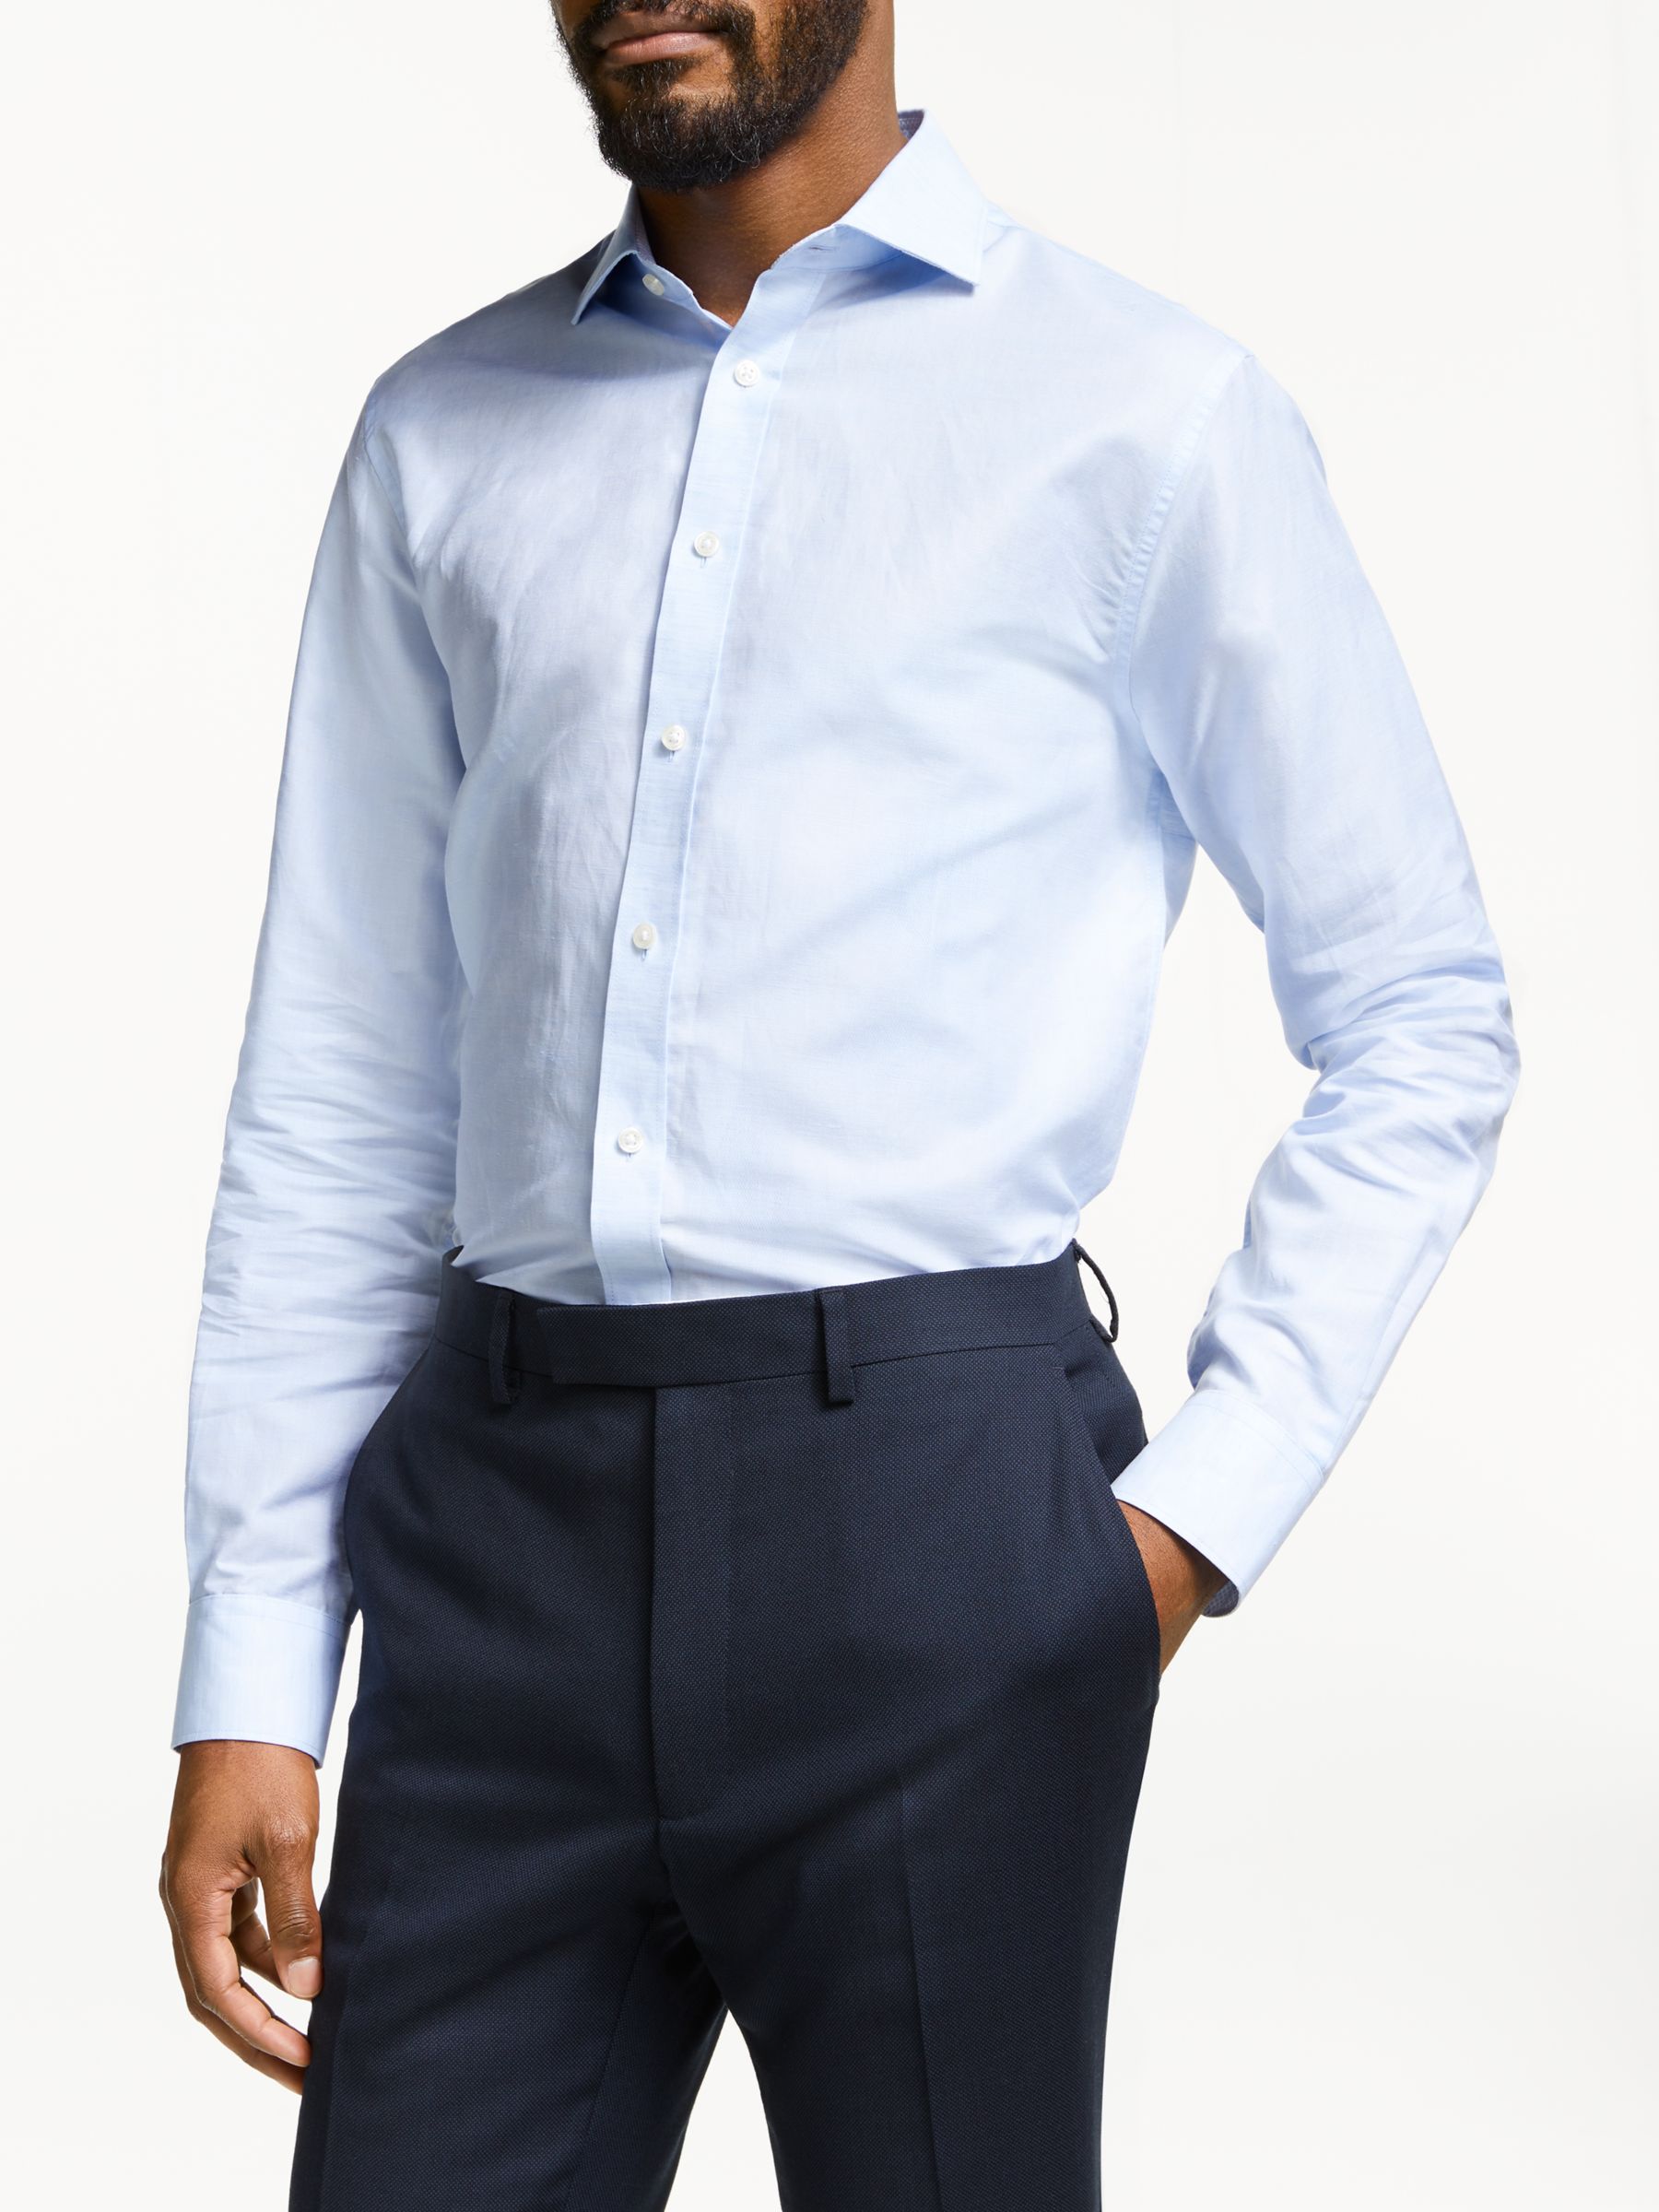 John Lewis & Partners Cotton Linen Tailored Fit Shirt at John Lewis ...